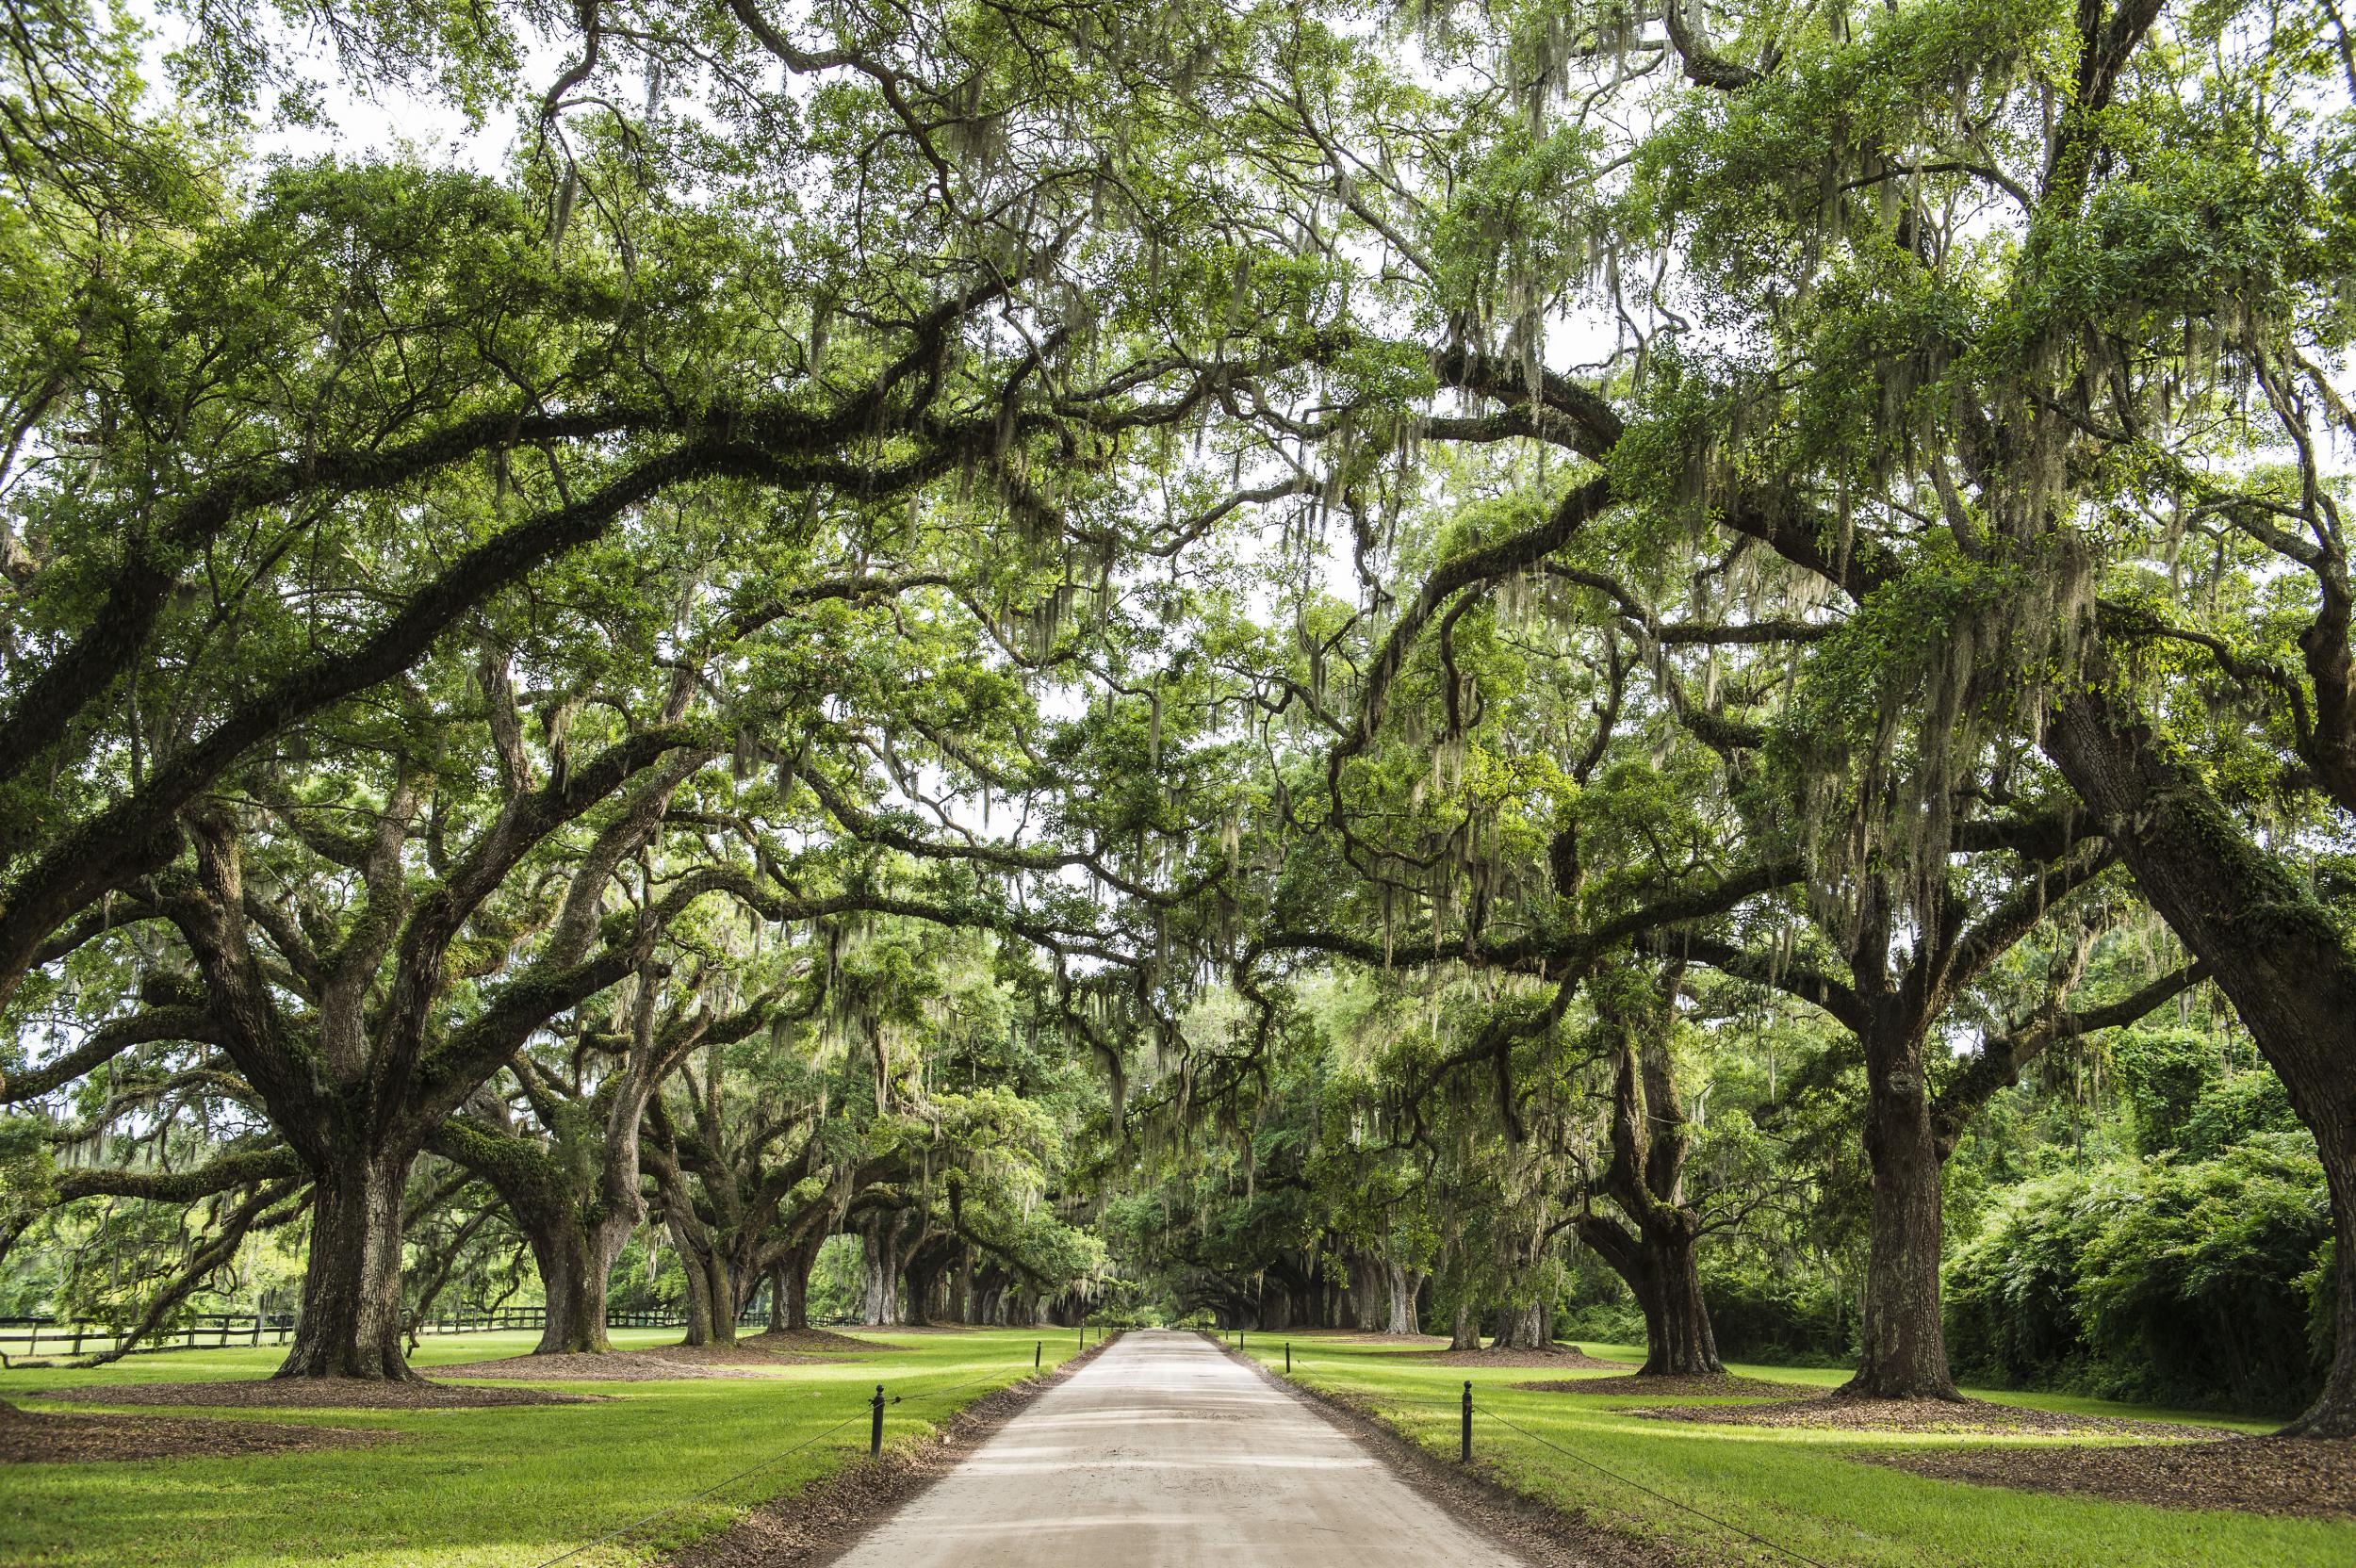 Charleston also has plenty of green spaces